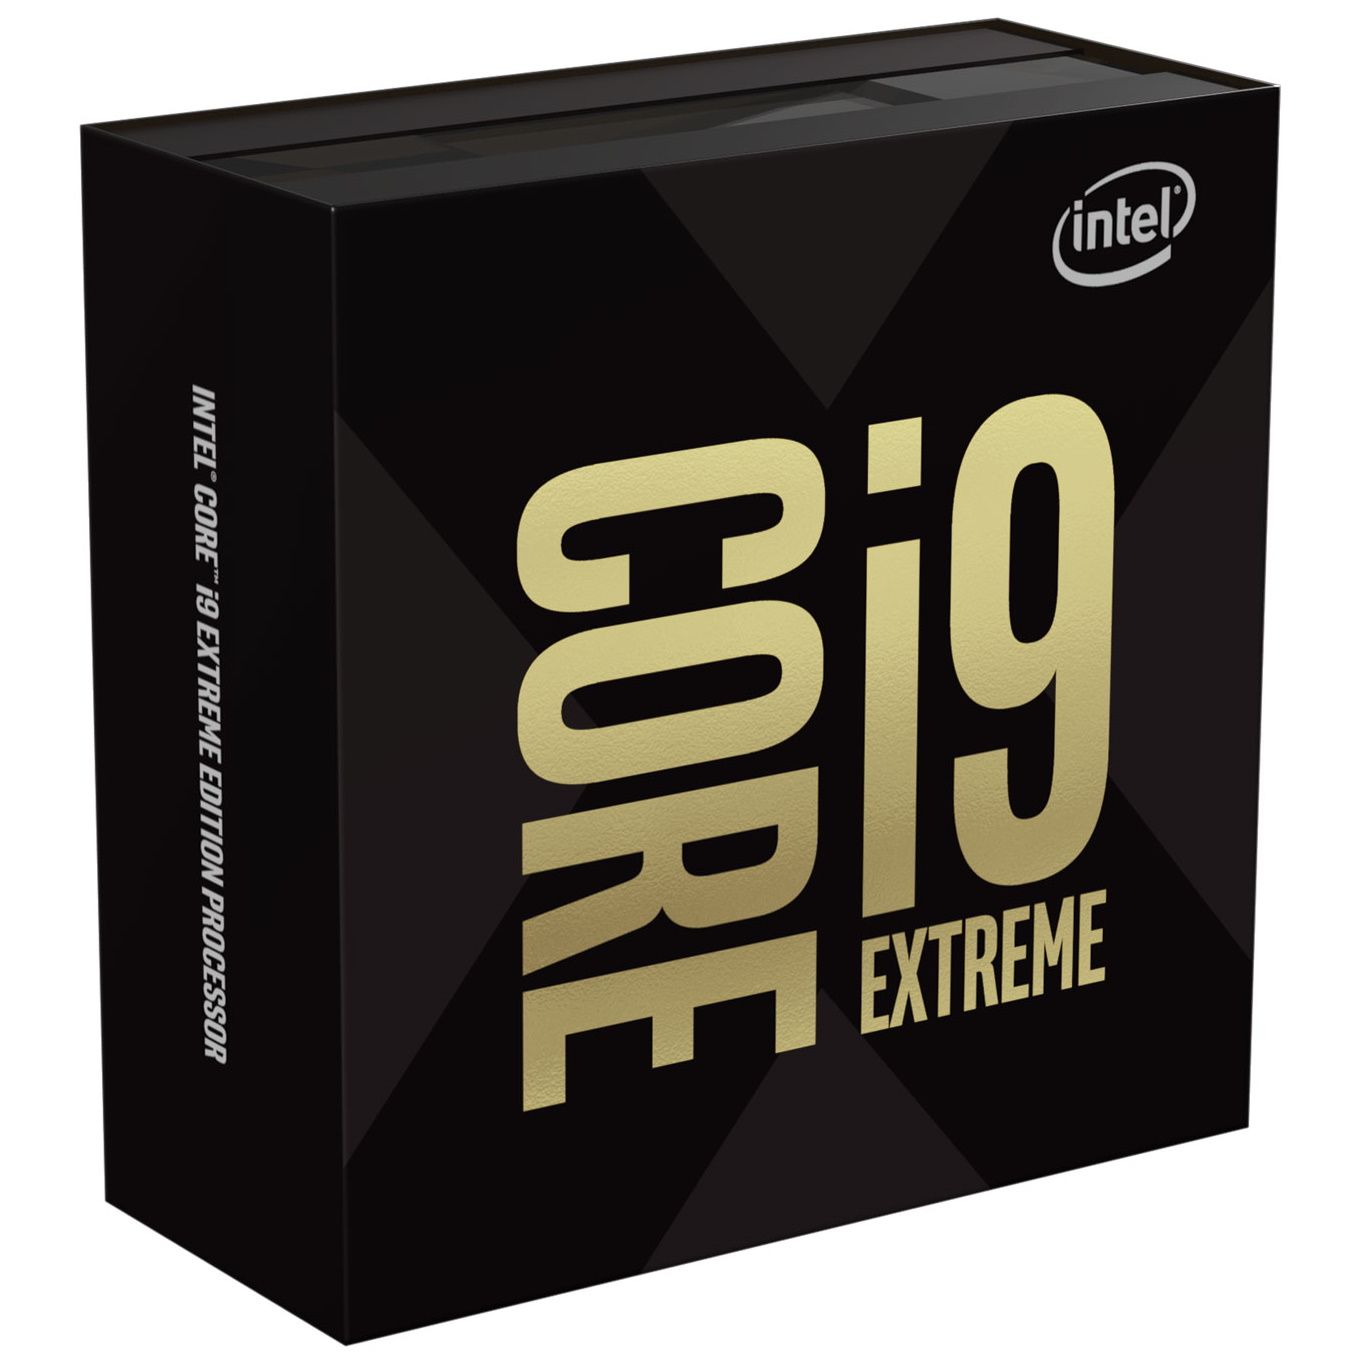 Core i9 10980xe. Процессор Intel Core i9-10980xe Box. Процессор Intel Core i9-10980xe extreme Edition lga2066, 18 x 3000 МГЦ, OEM. Процессор Intel Core i9-10920x Box.